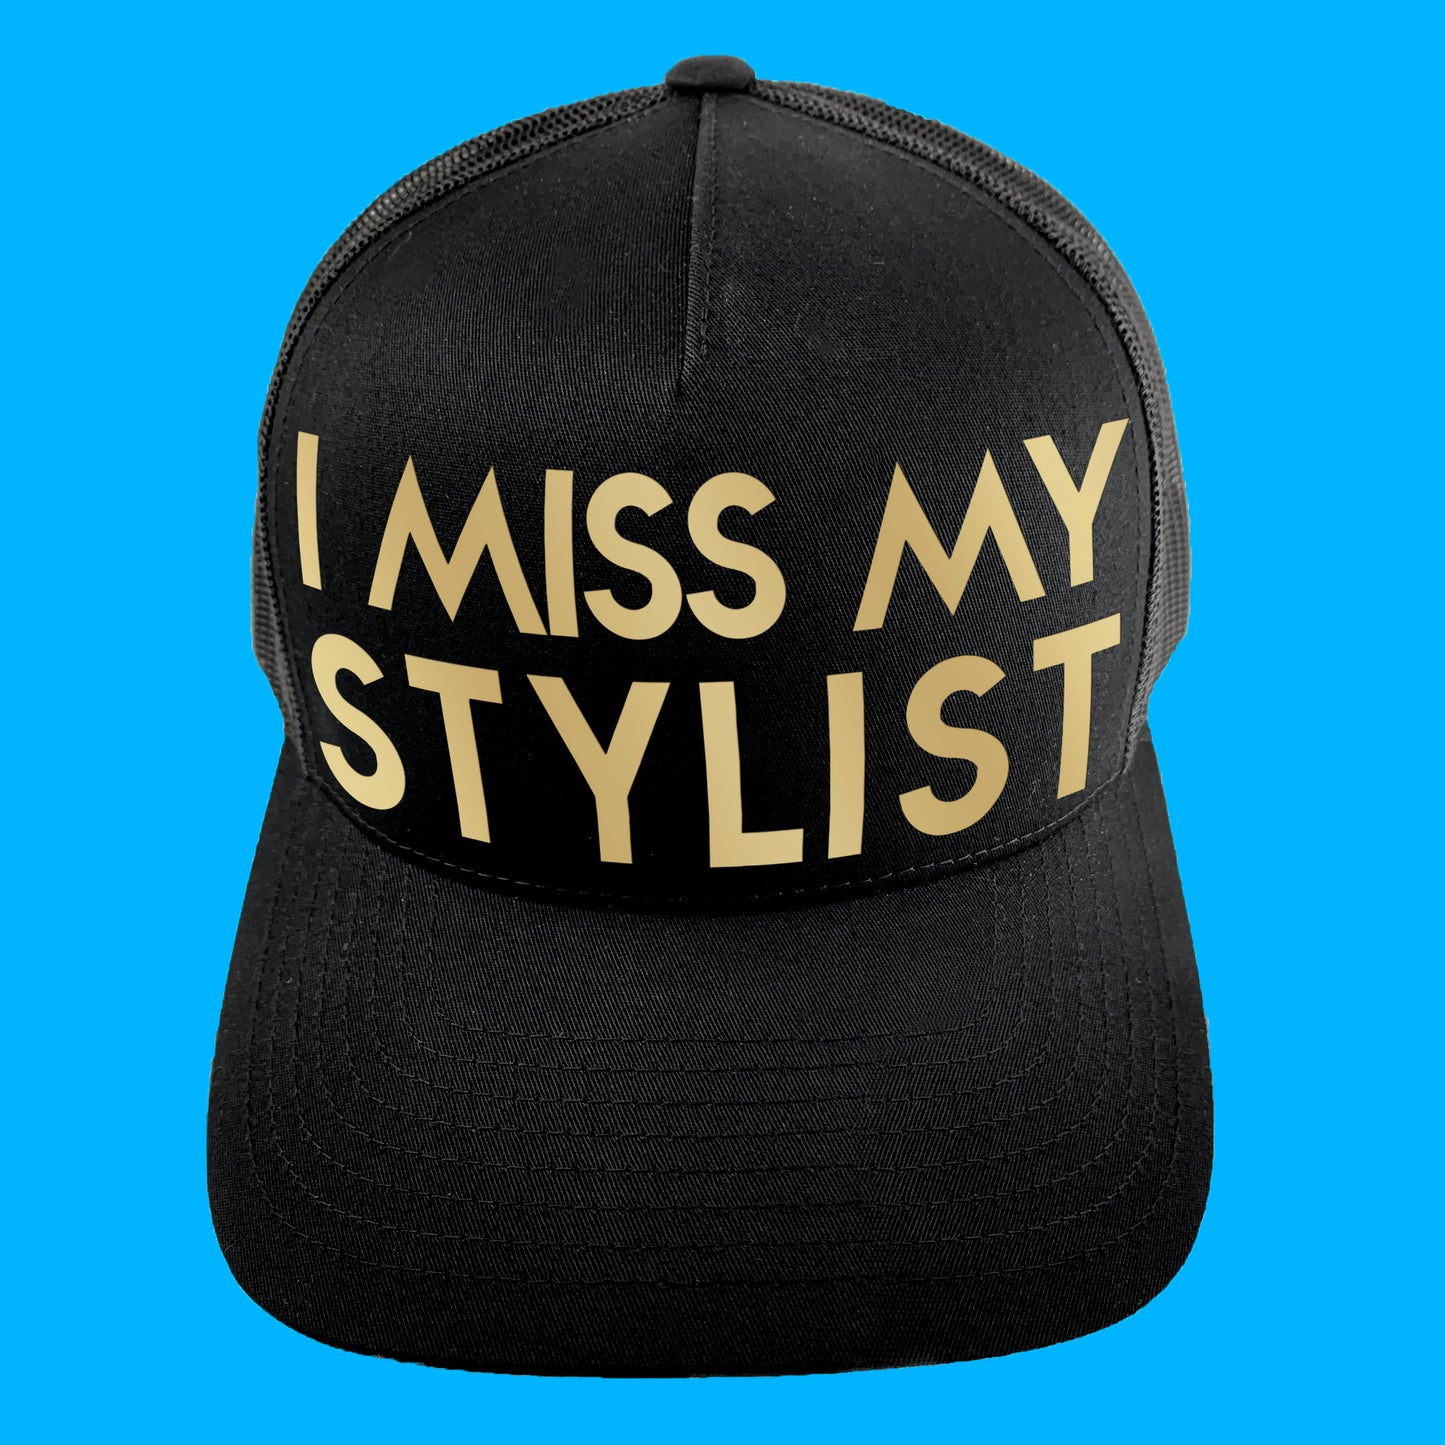 I Miss My Stylist ball cap - unisex black snapback hat with gold semi-matte text by BBJ / Glitter Garage